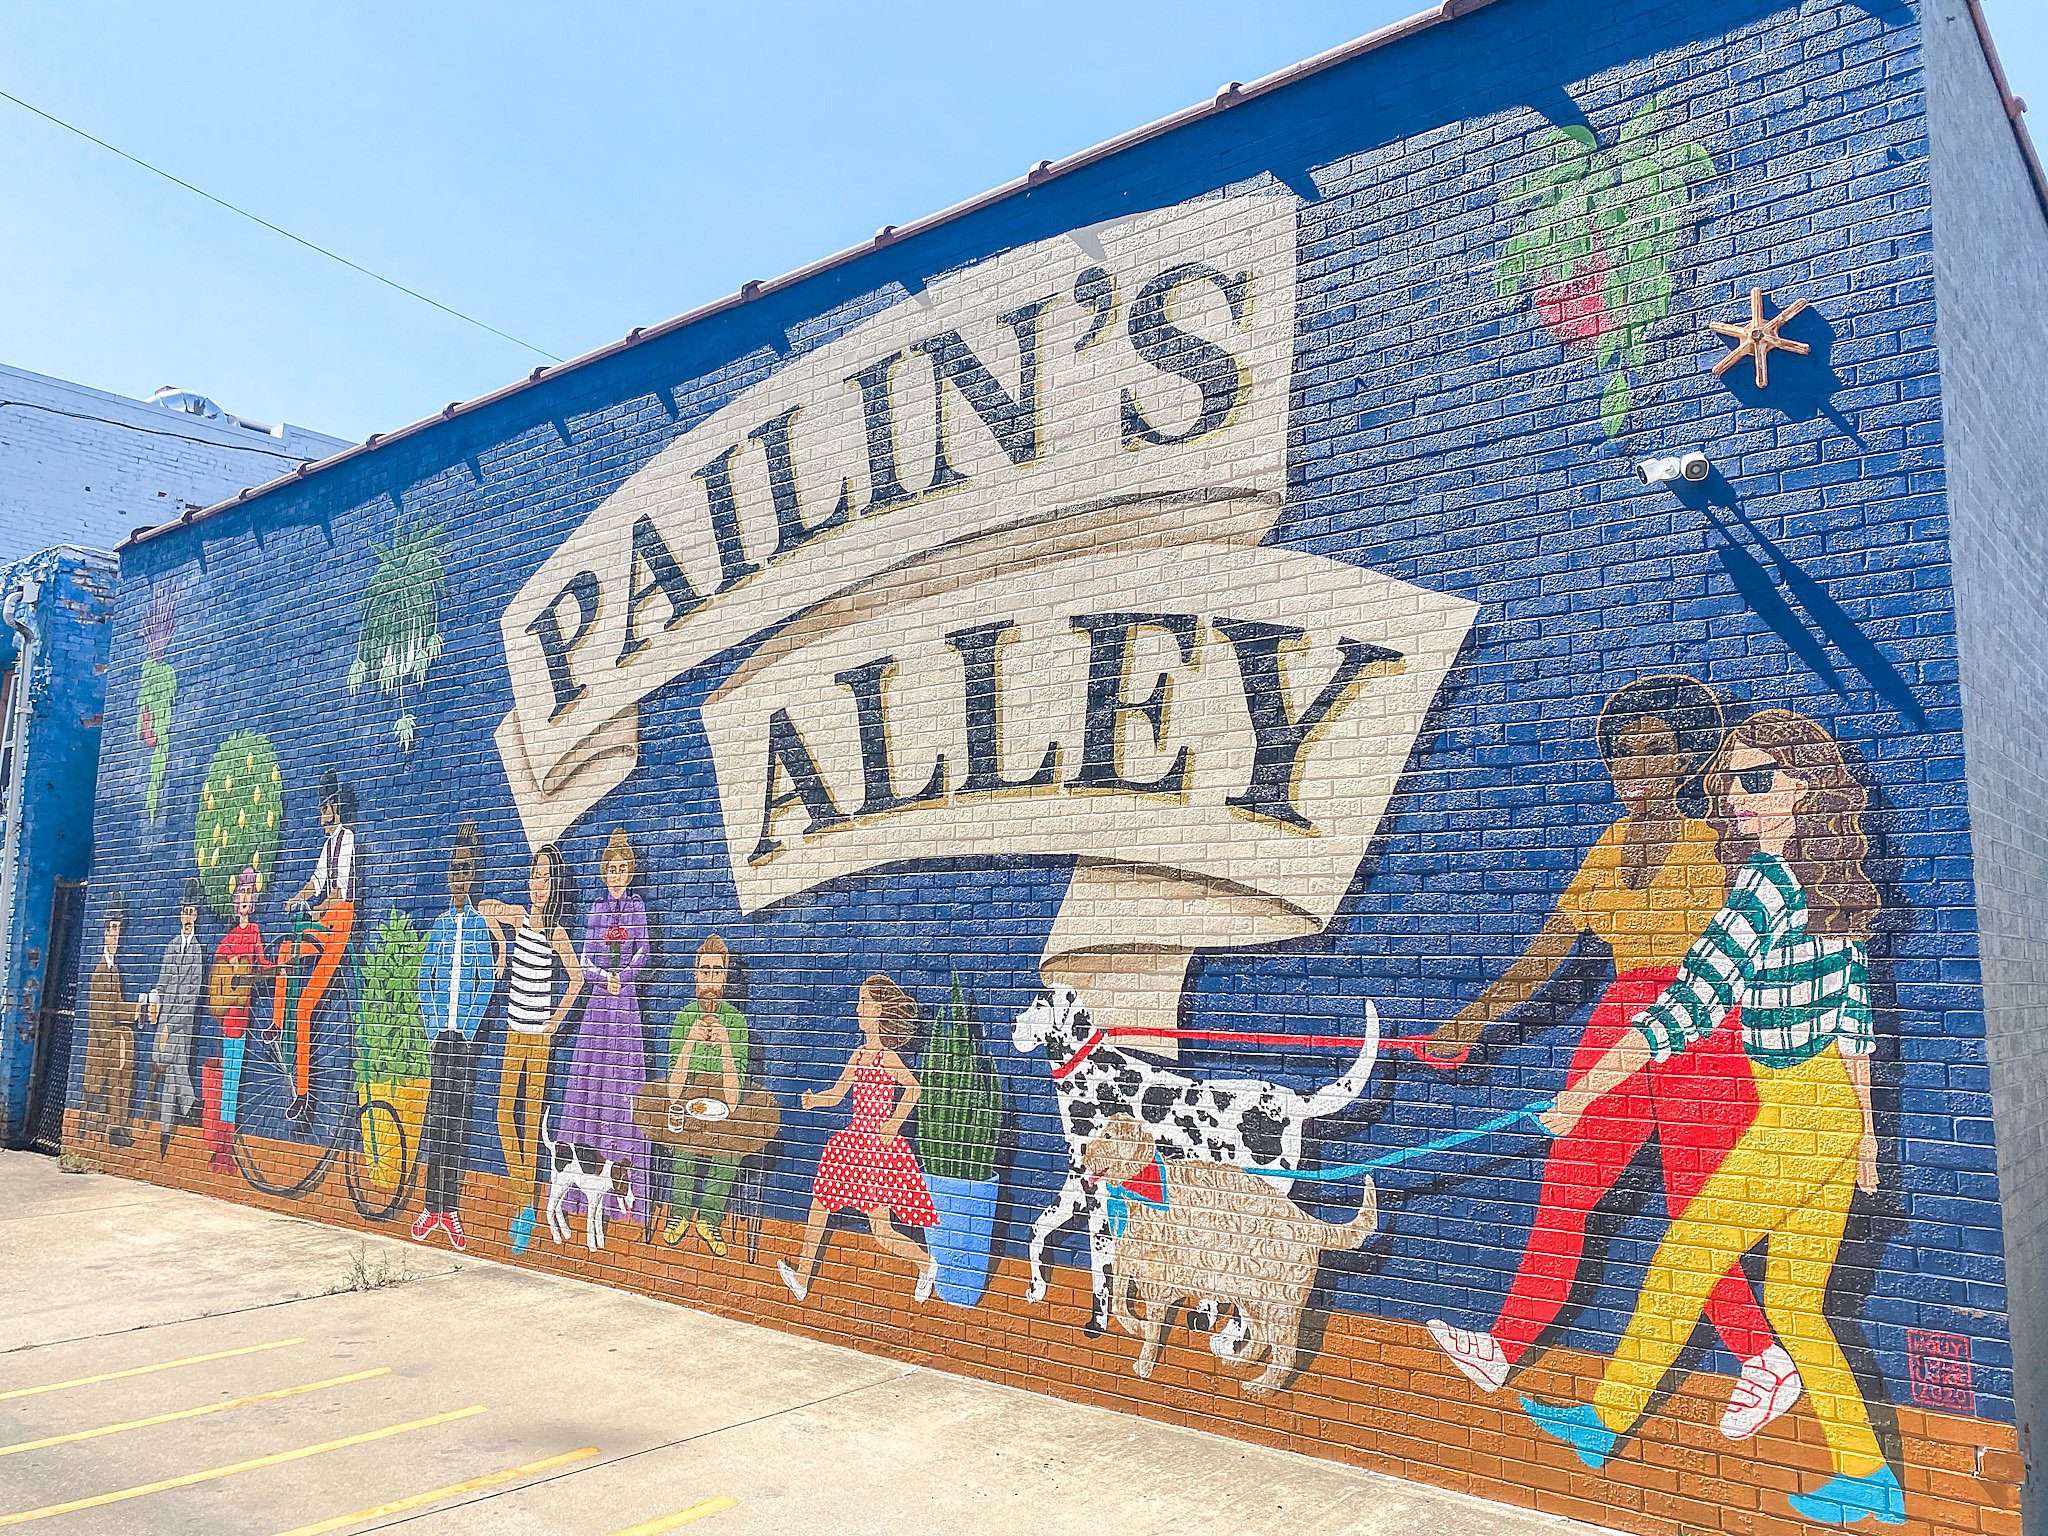 Pailin's Alley